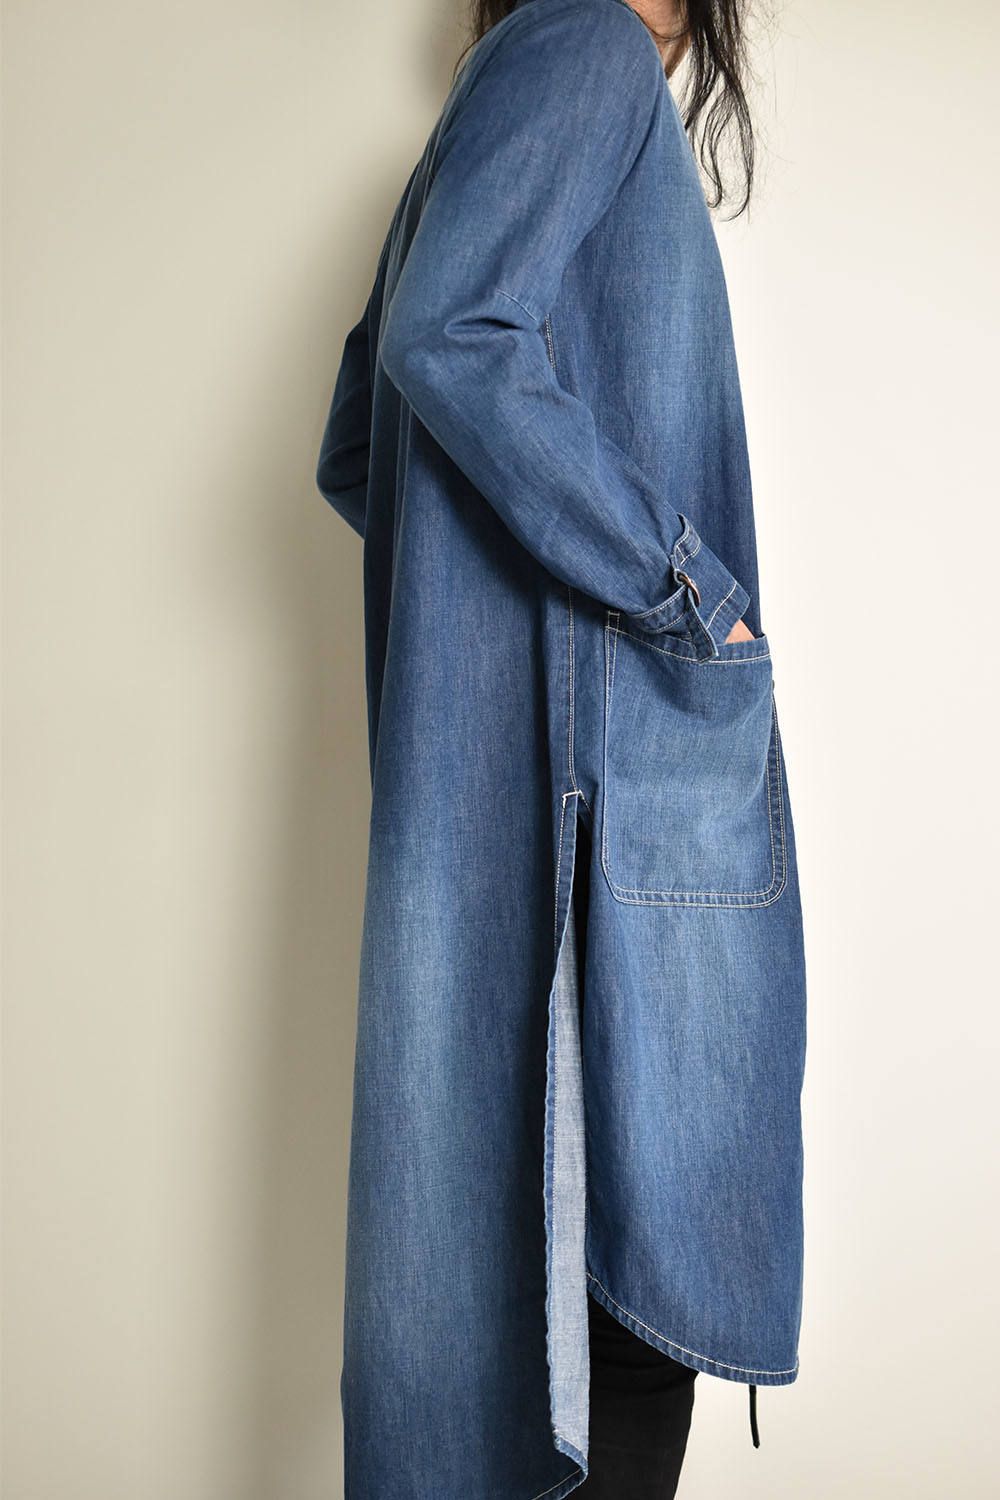 nude:masahiko maruyama - Denim Long Shirt  Jaket